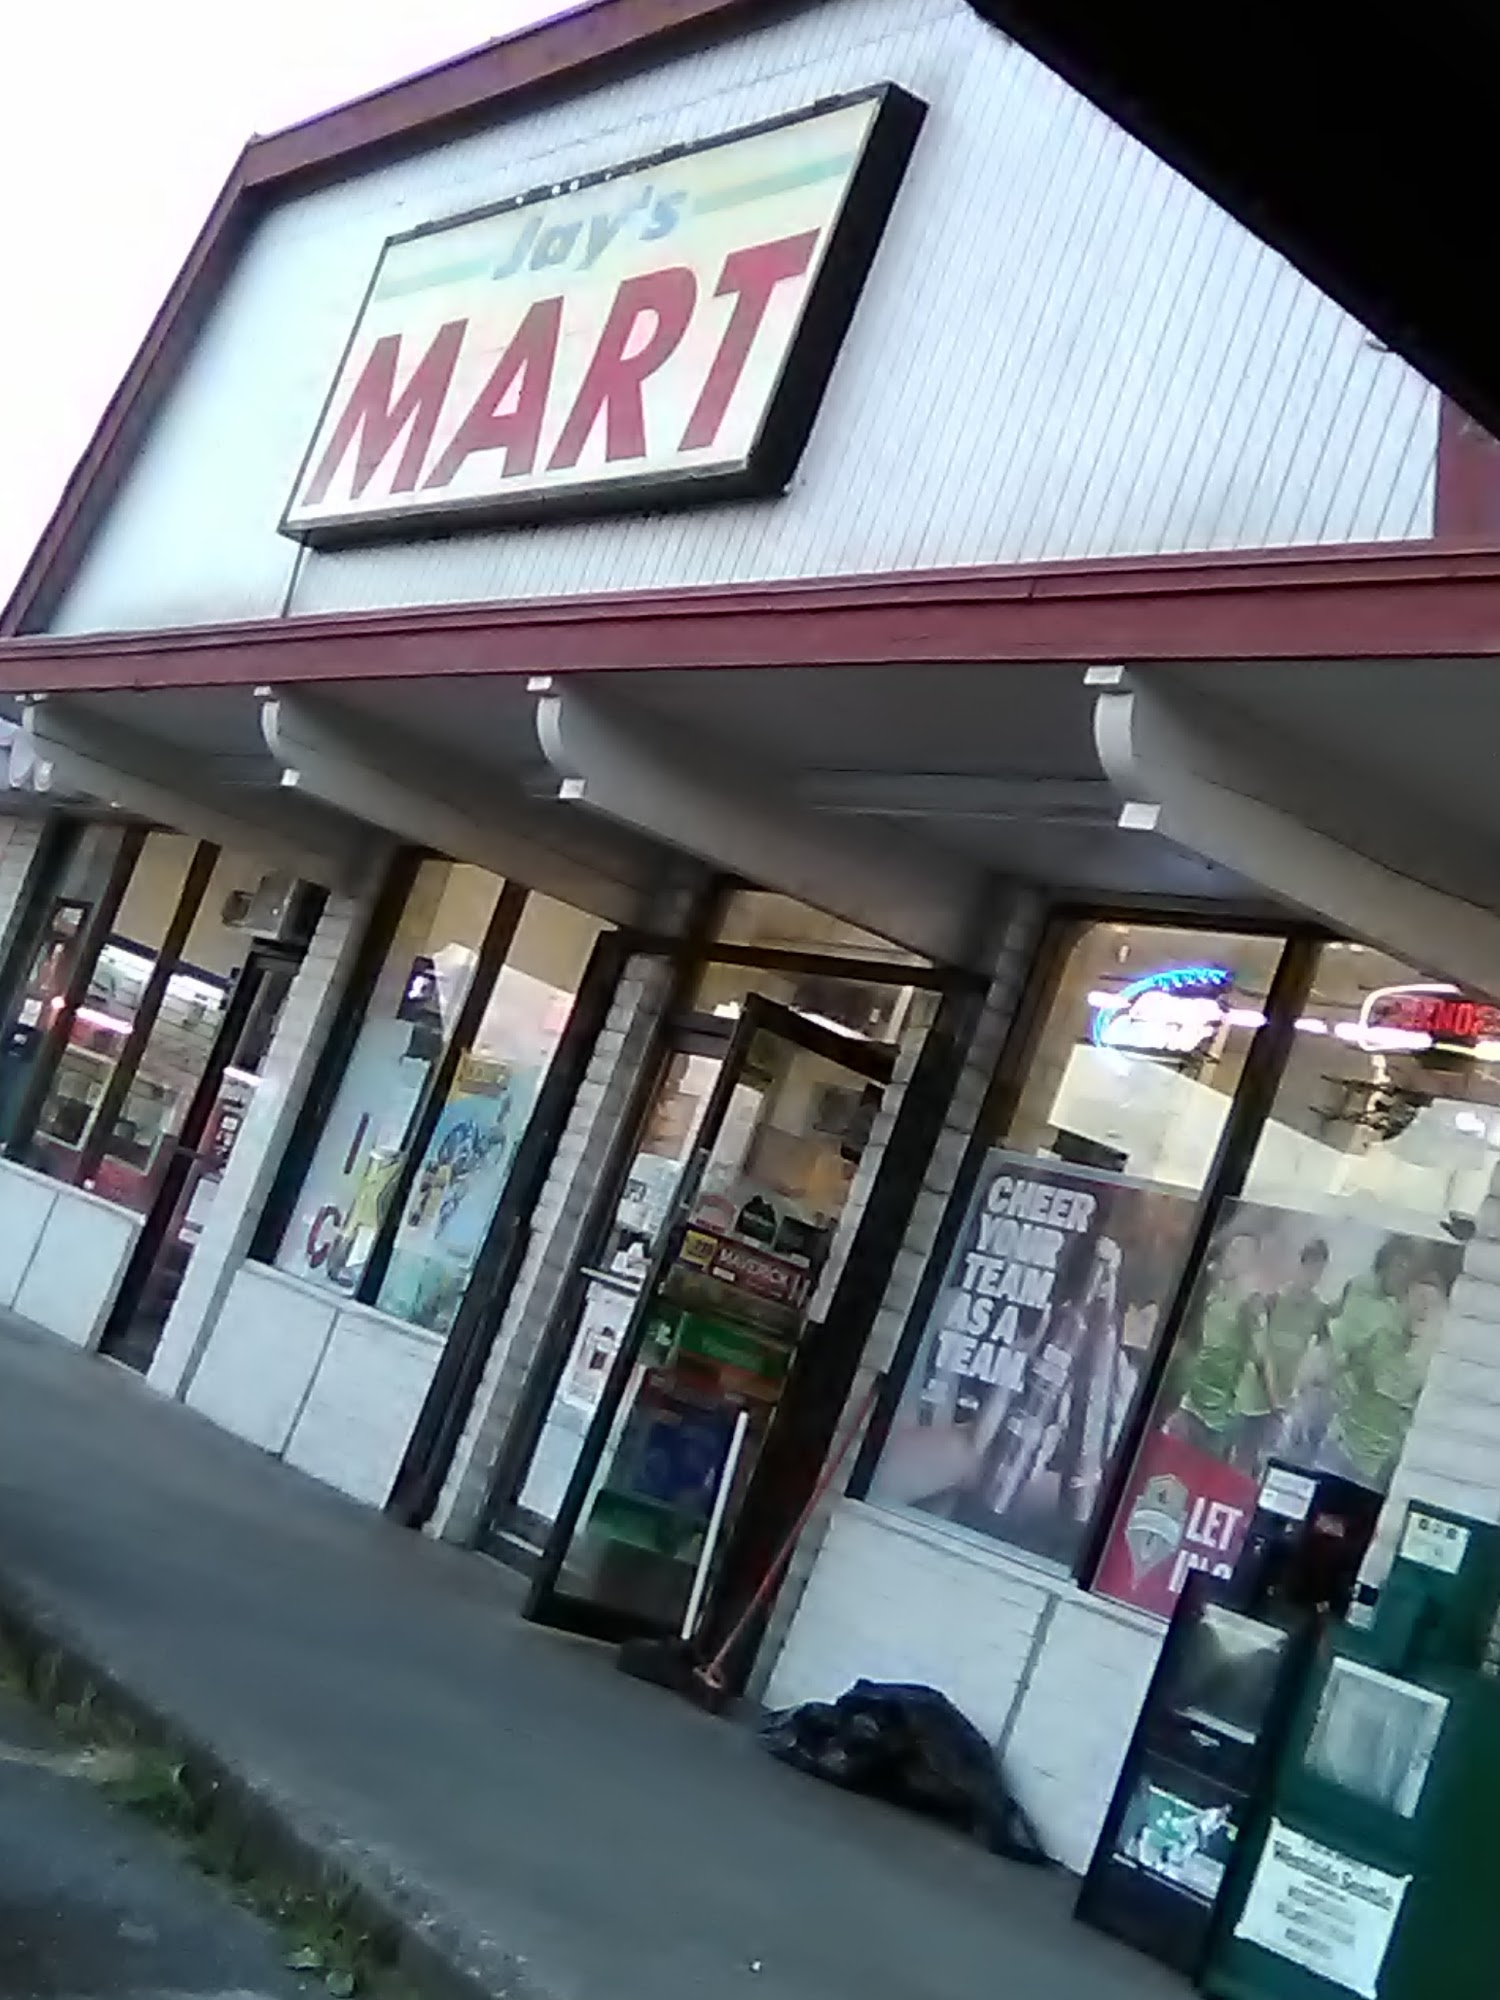 Jay's Mini Mart